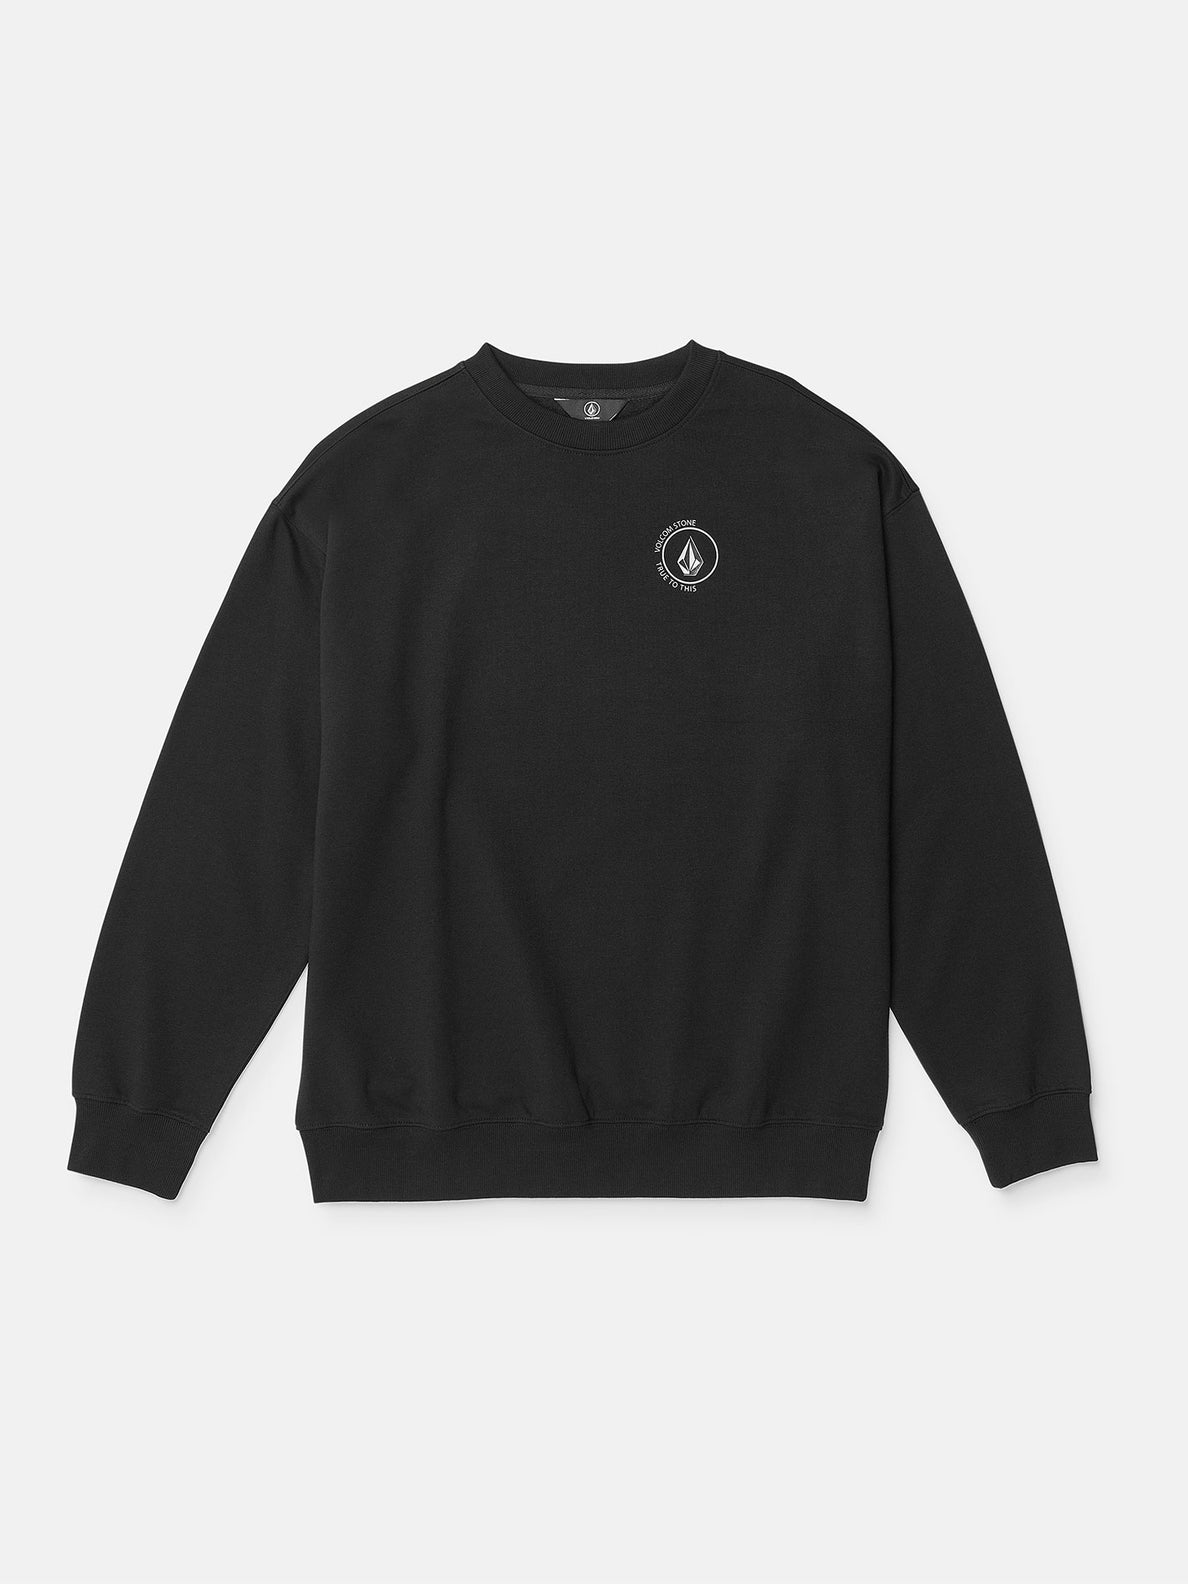 Roundabout Crew Sweatshirt - Black